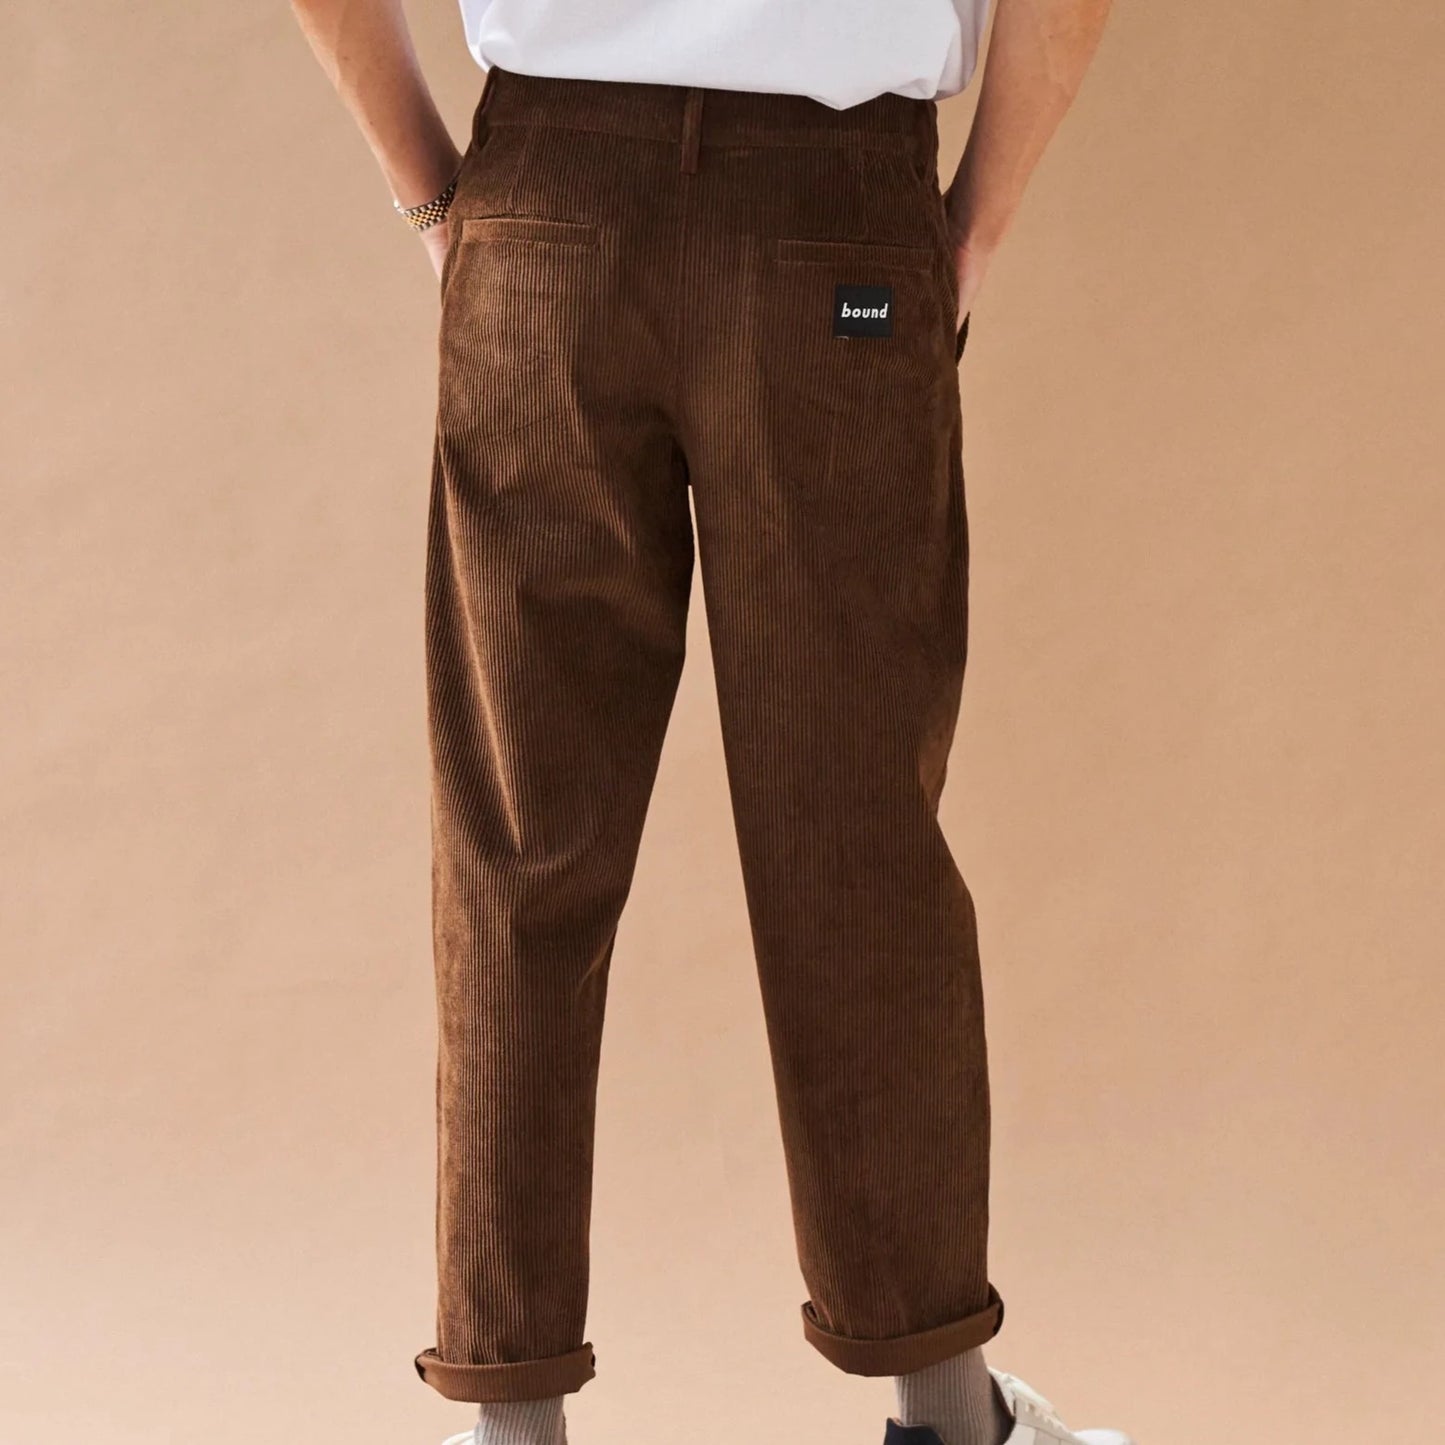 Mens Gap Corduroy Jeans 33x30 Straight Khaki Cotton Pants 33x29 | eBay